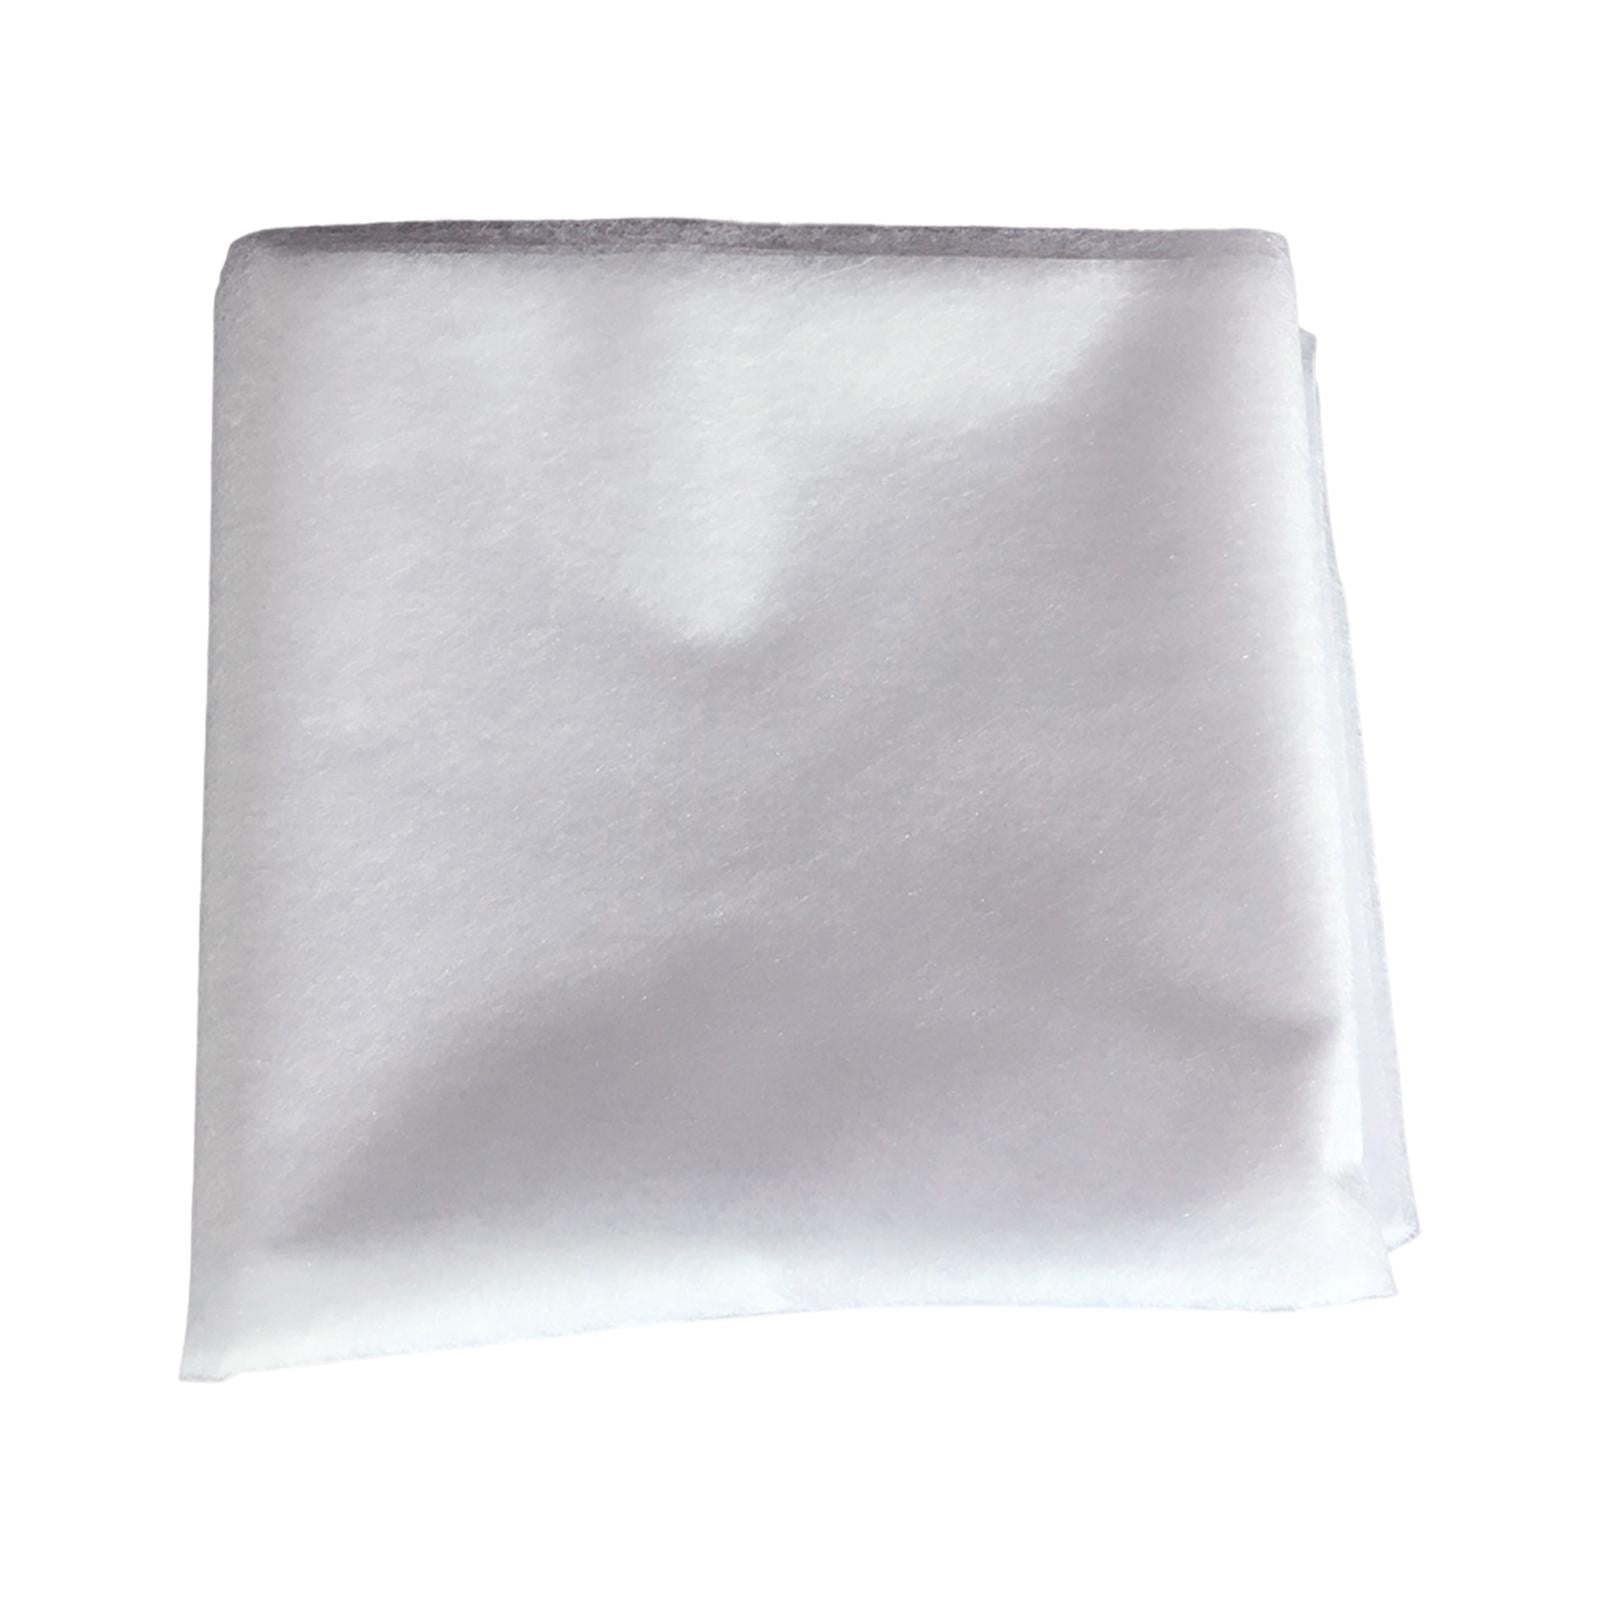 HeatnBond Peelnstick Fabric Fuse 4.25 inch x 5 inch Clear Sheet